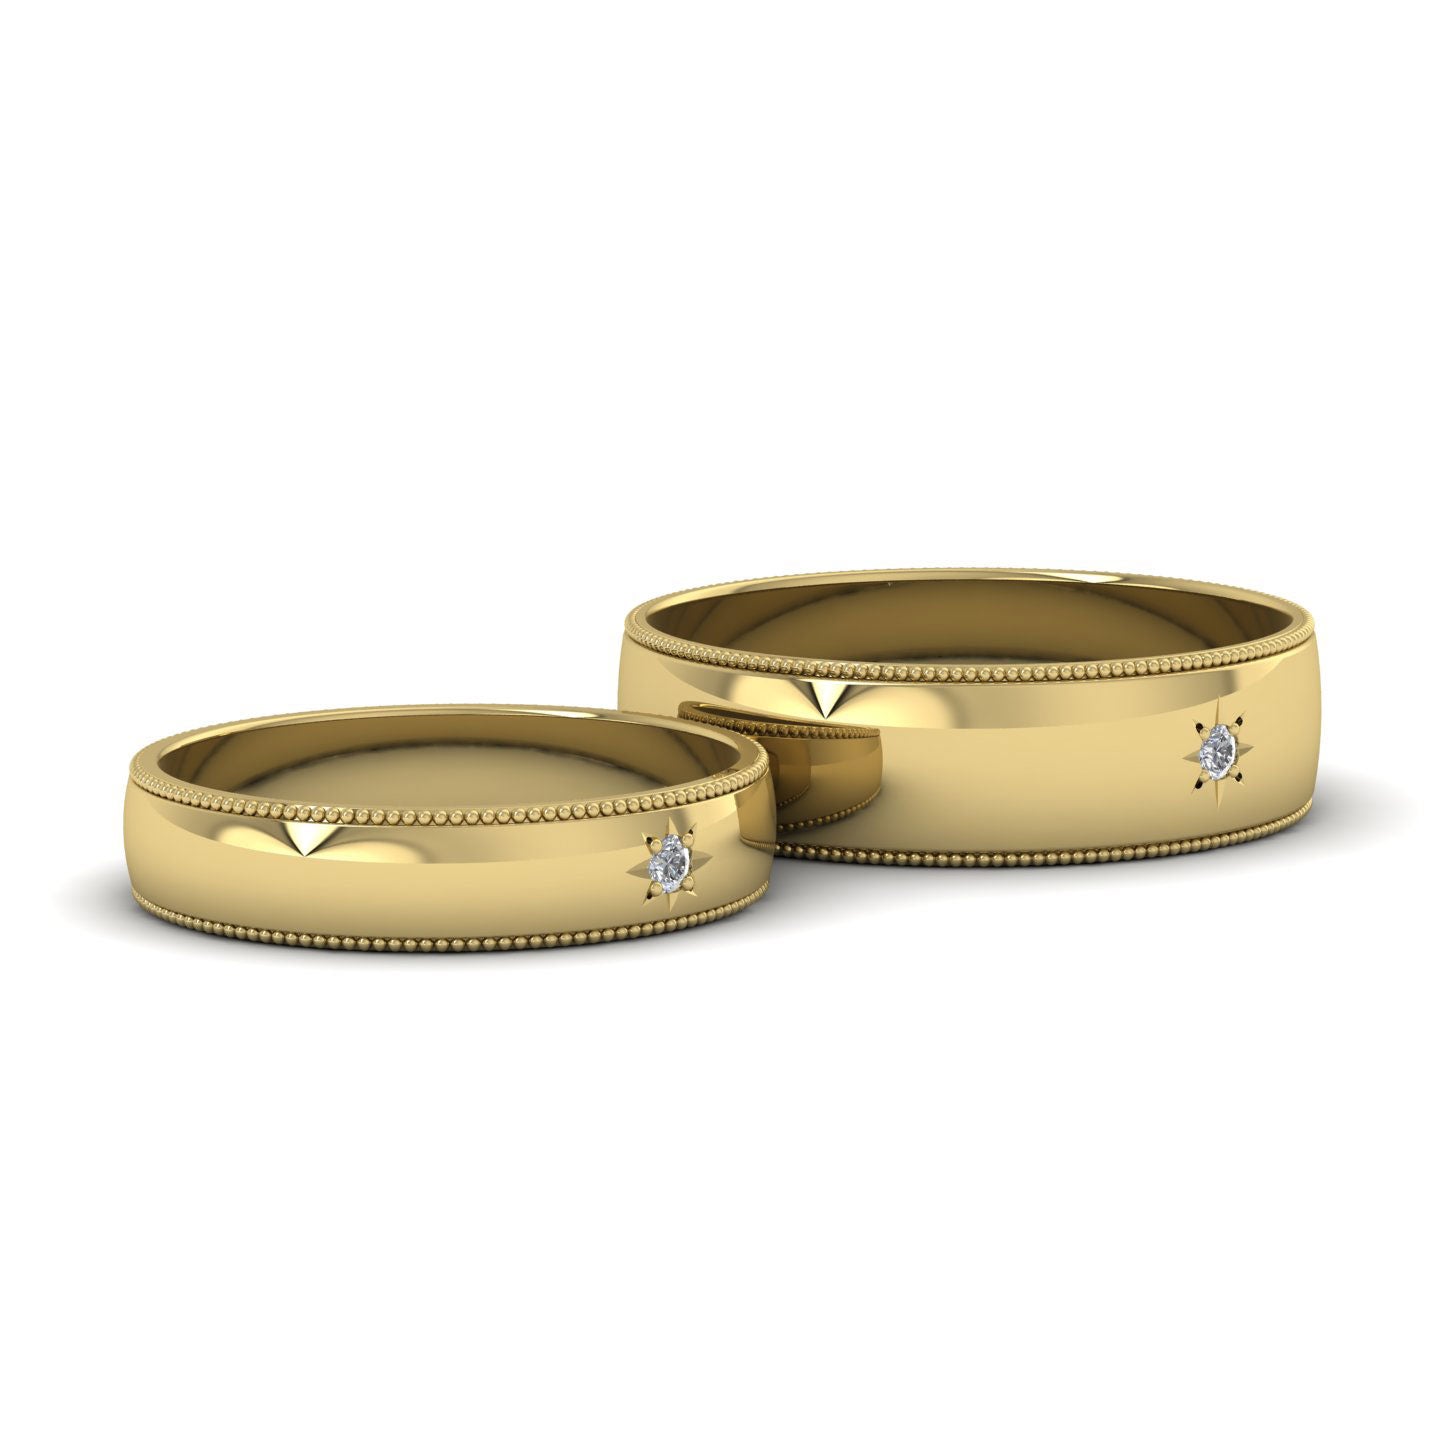 Millgrained Edge And Single Star Diamond Set 9ct Yellow Gold 6mm Wedding Ring